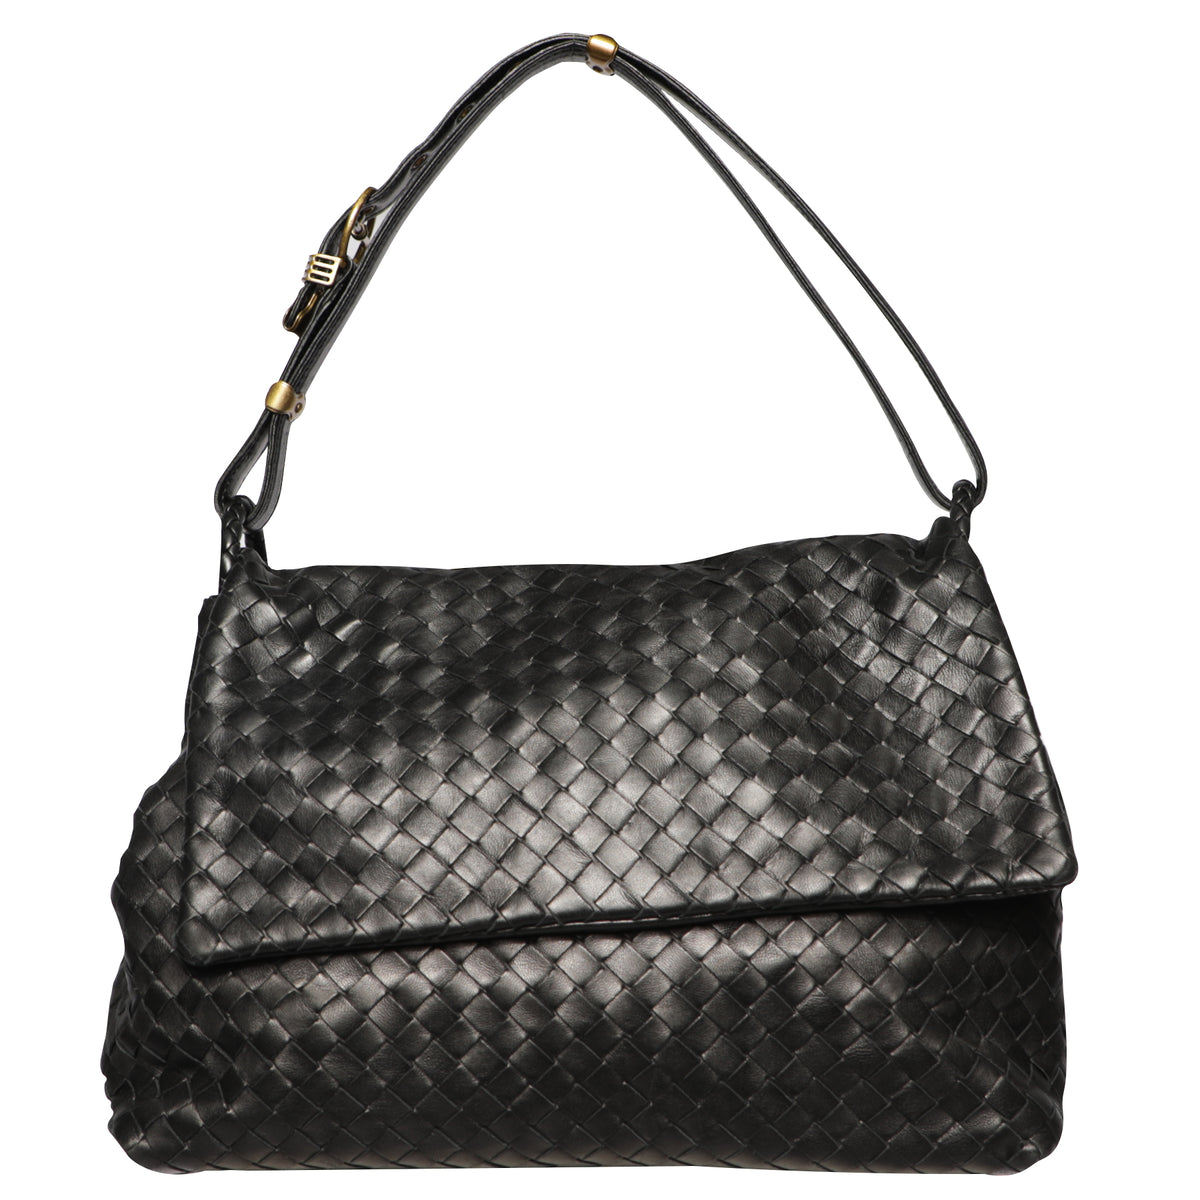 Bottega Veneta Woven Leather Intrecciato Shoulder Bag - Black